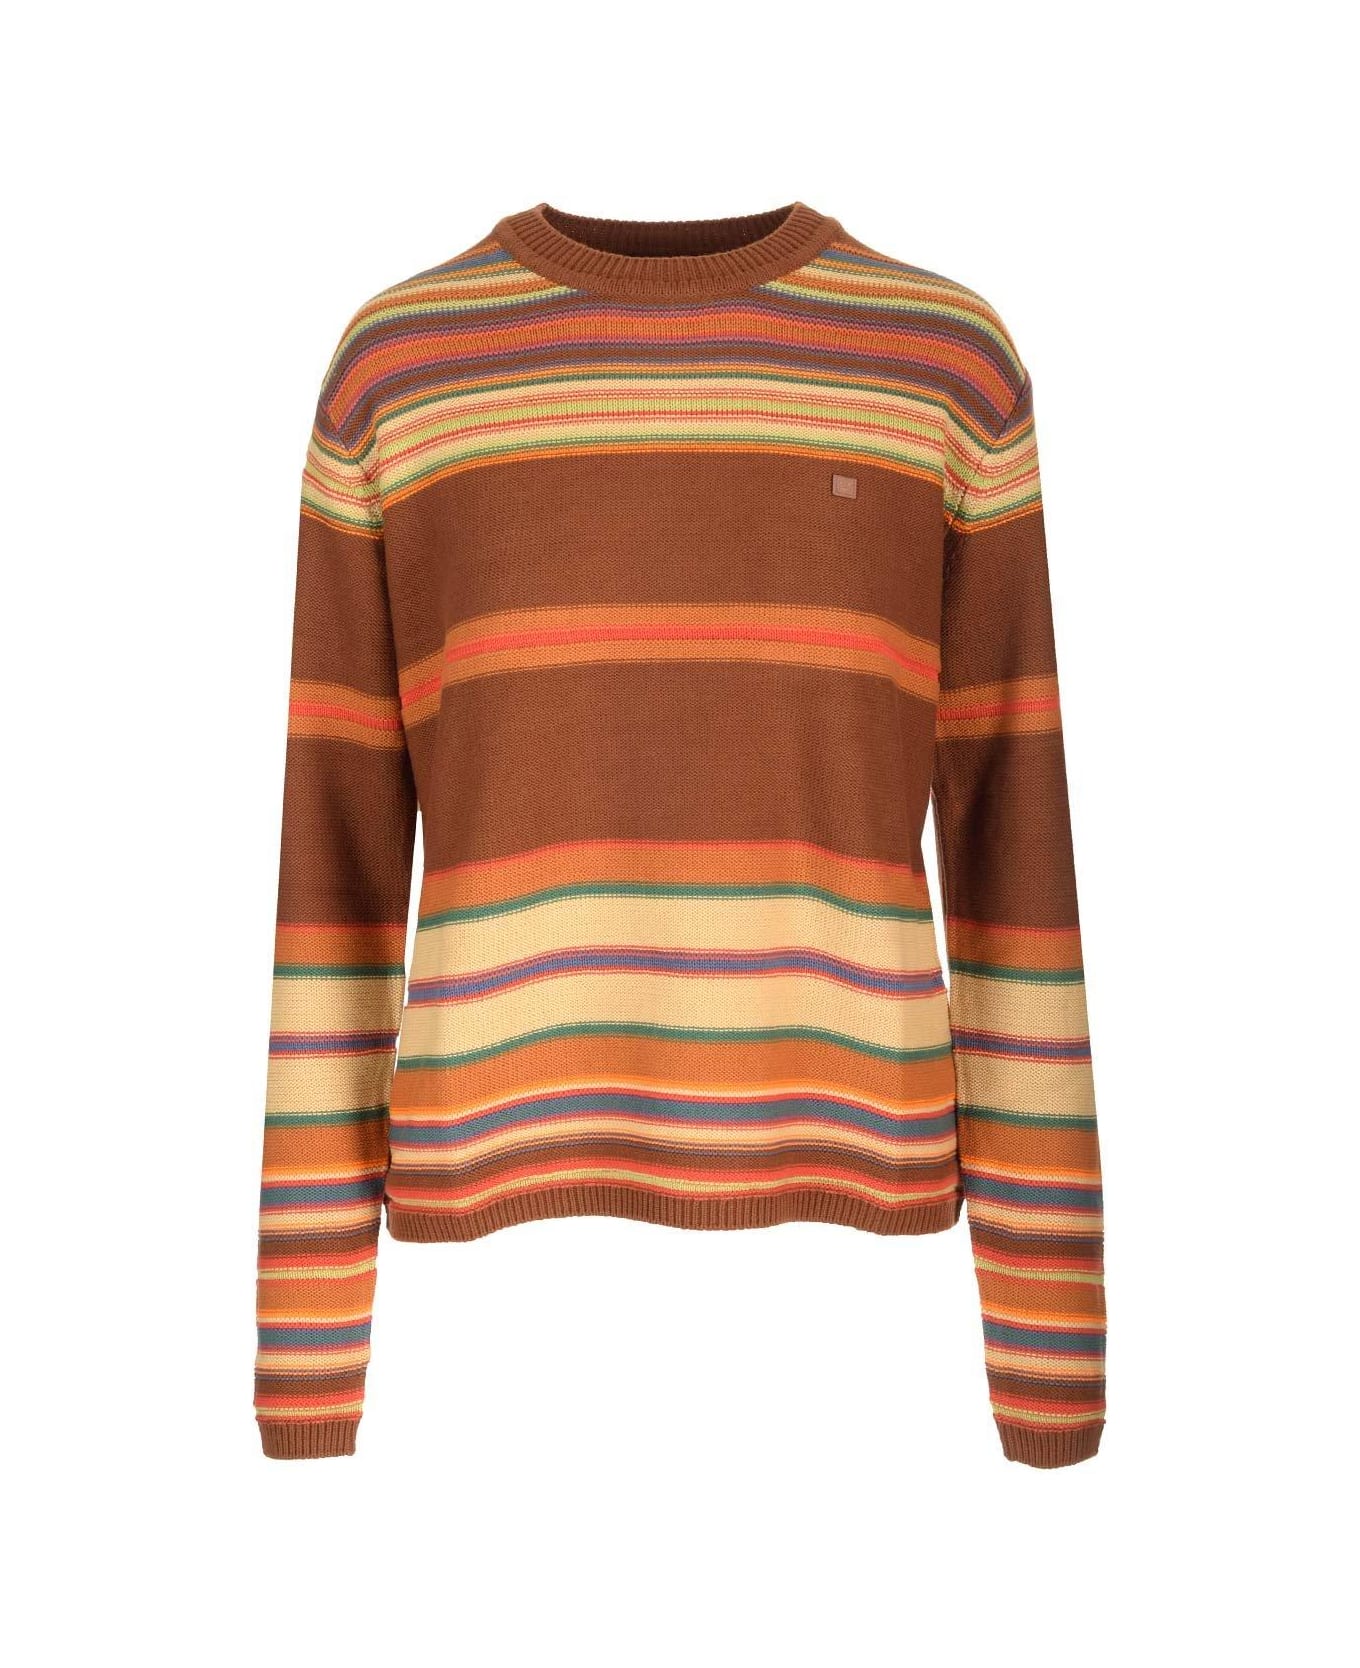 Acne Studios Striped Crewneck Sweater - Brown name:475